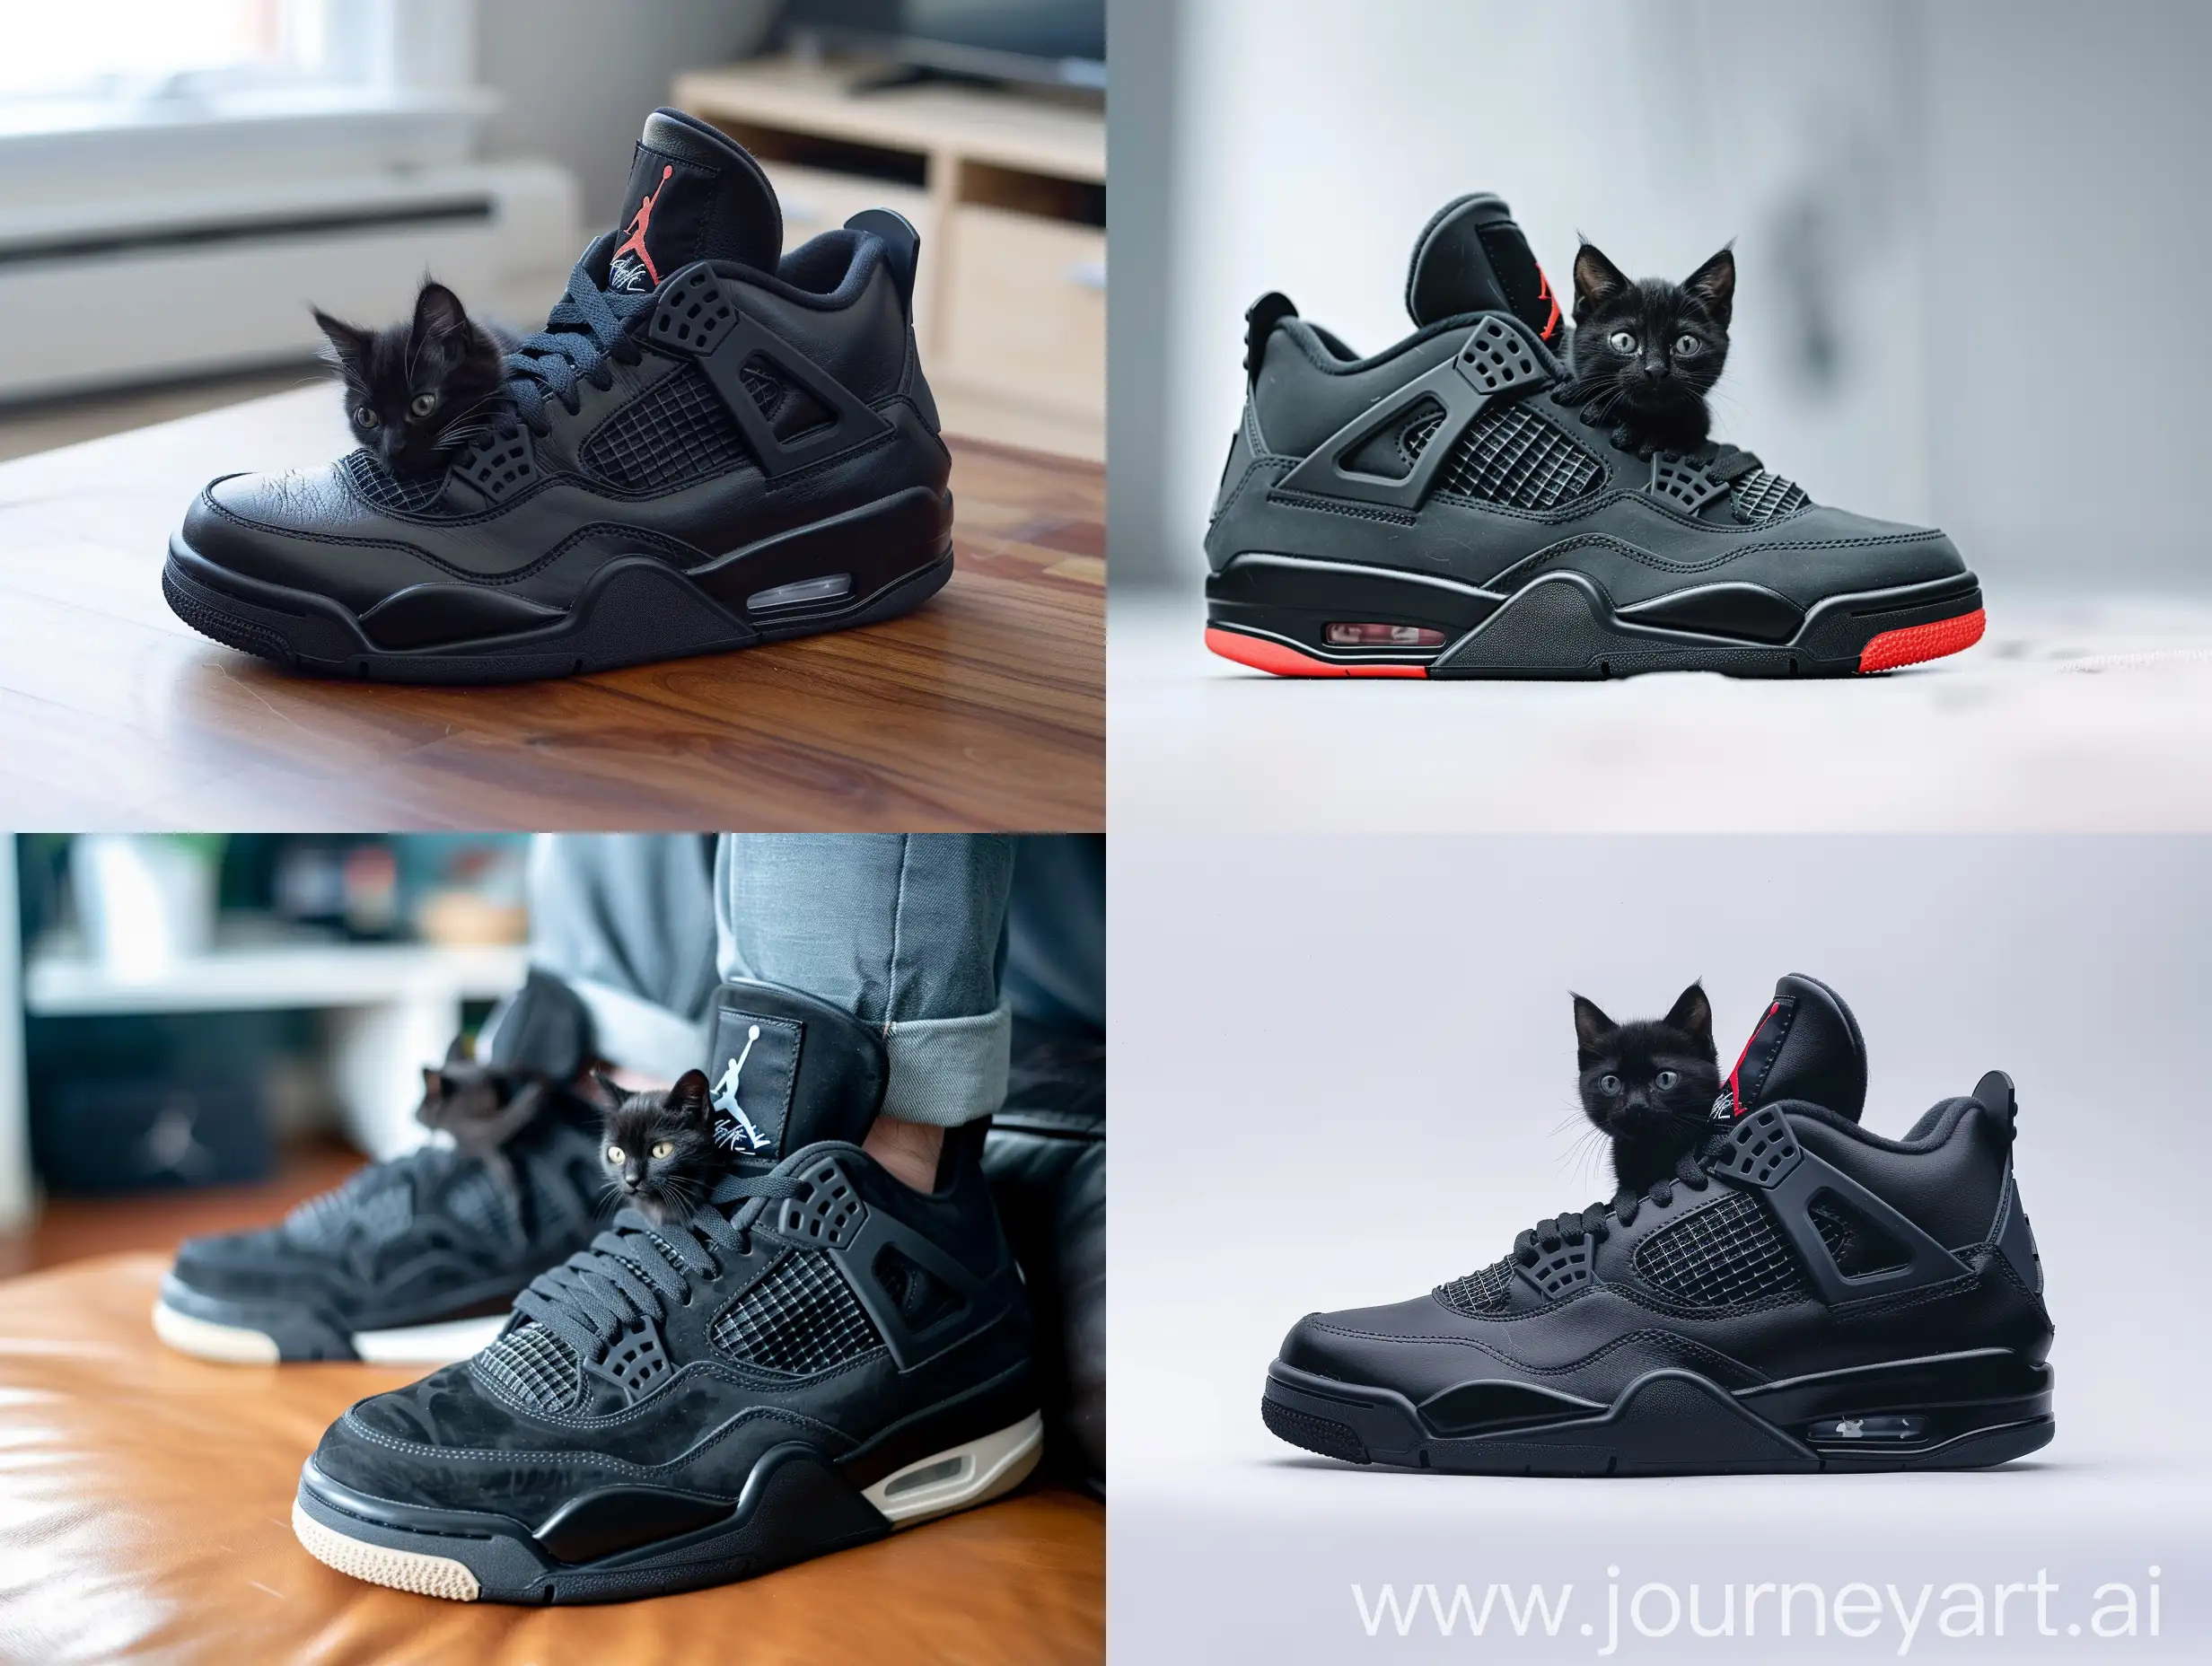 a black little cat sits inside the Nike Jordan 4 black cat shoes